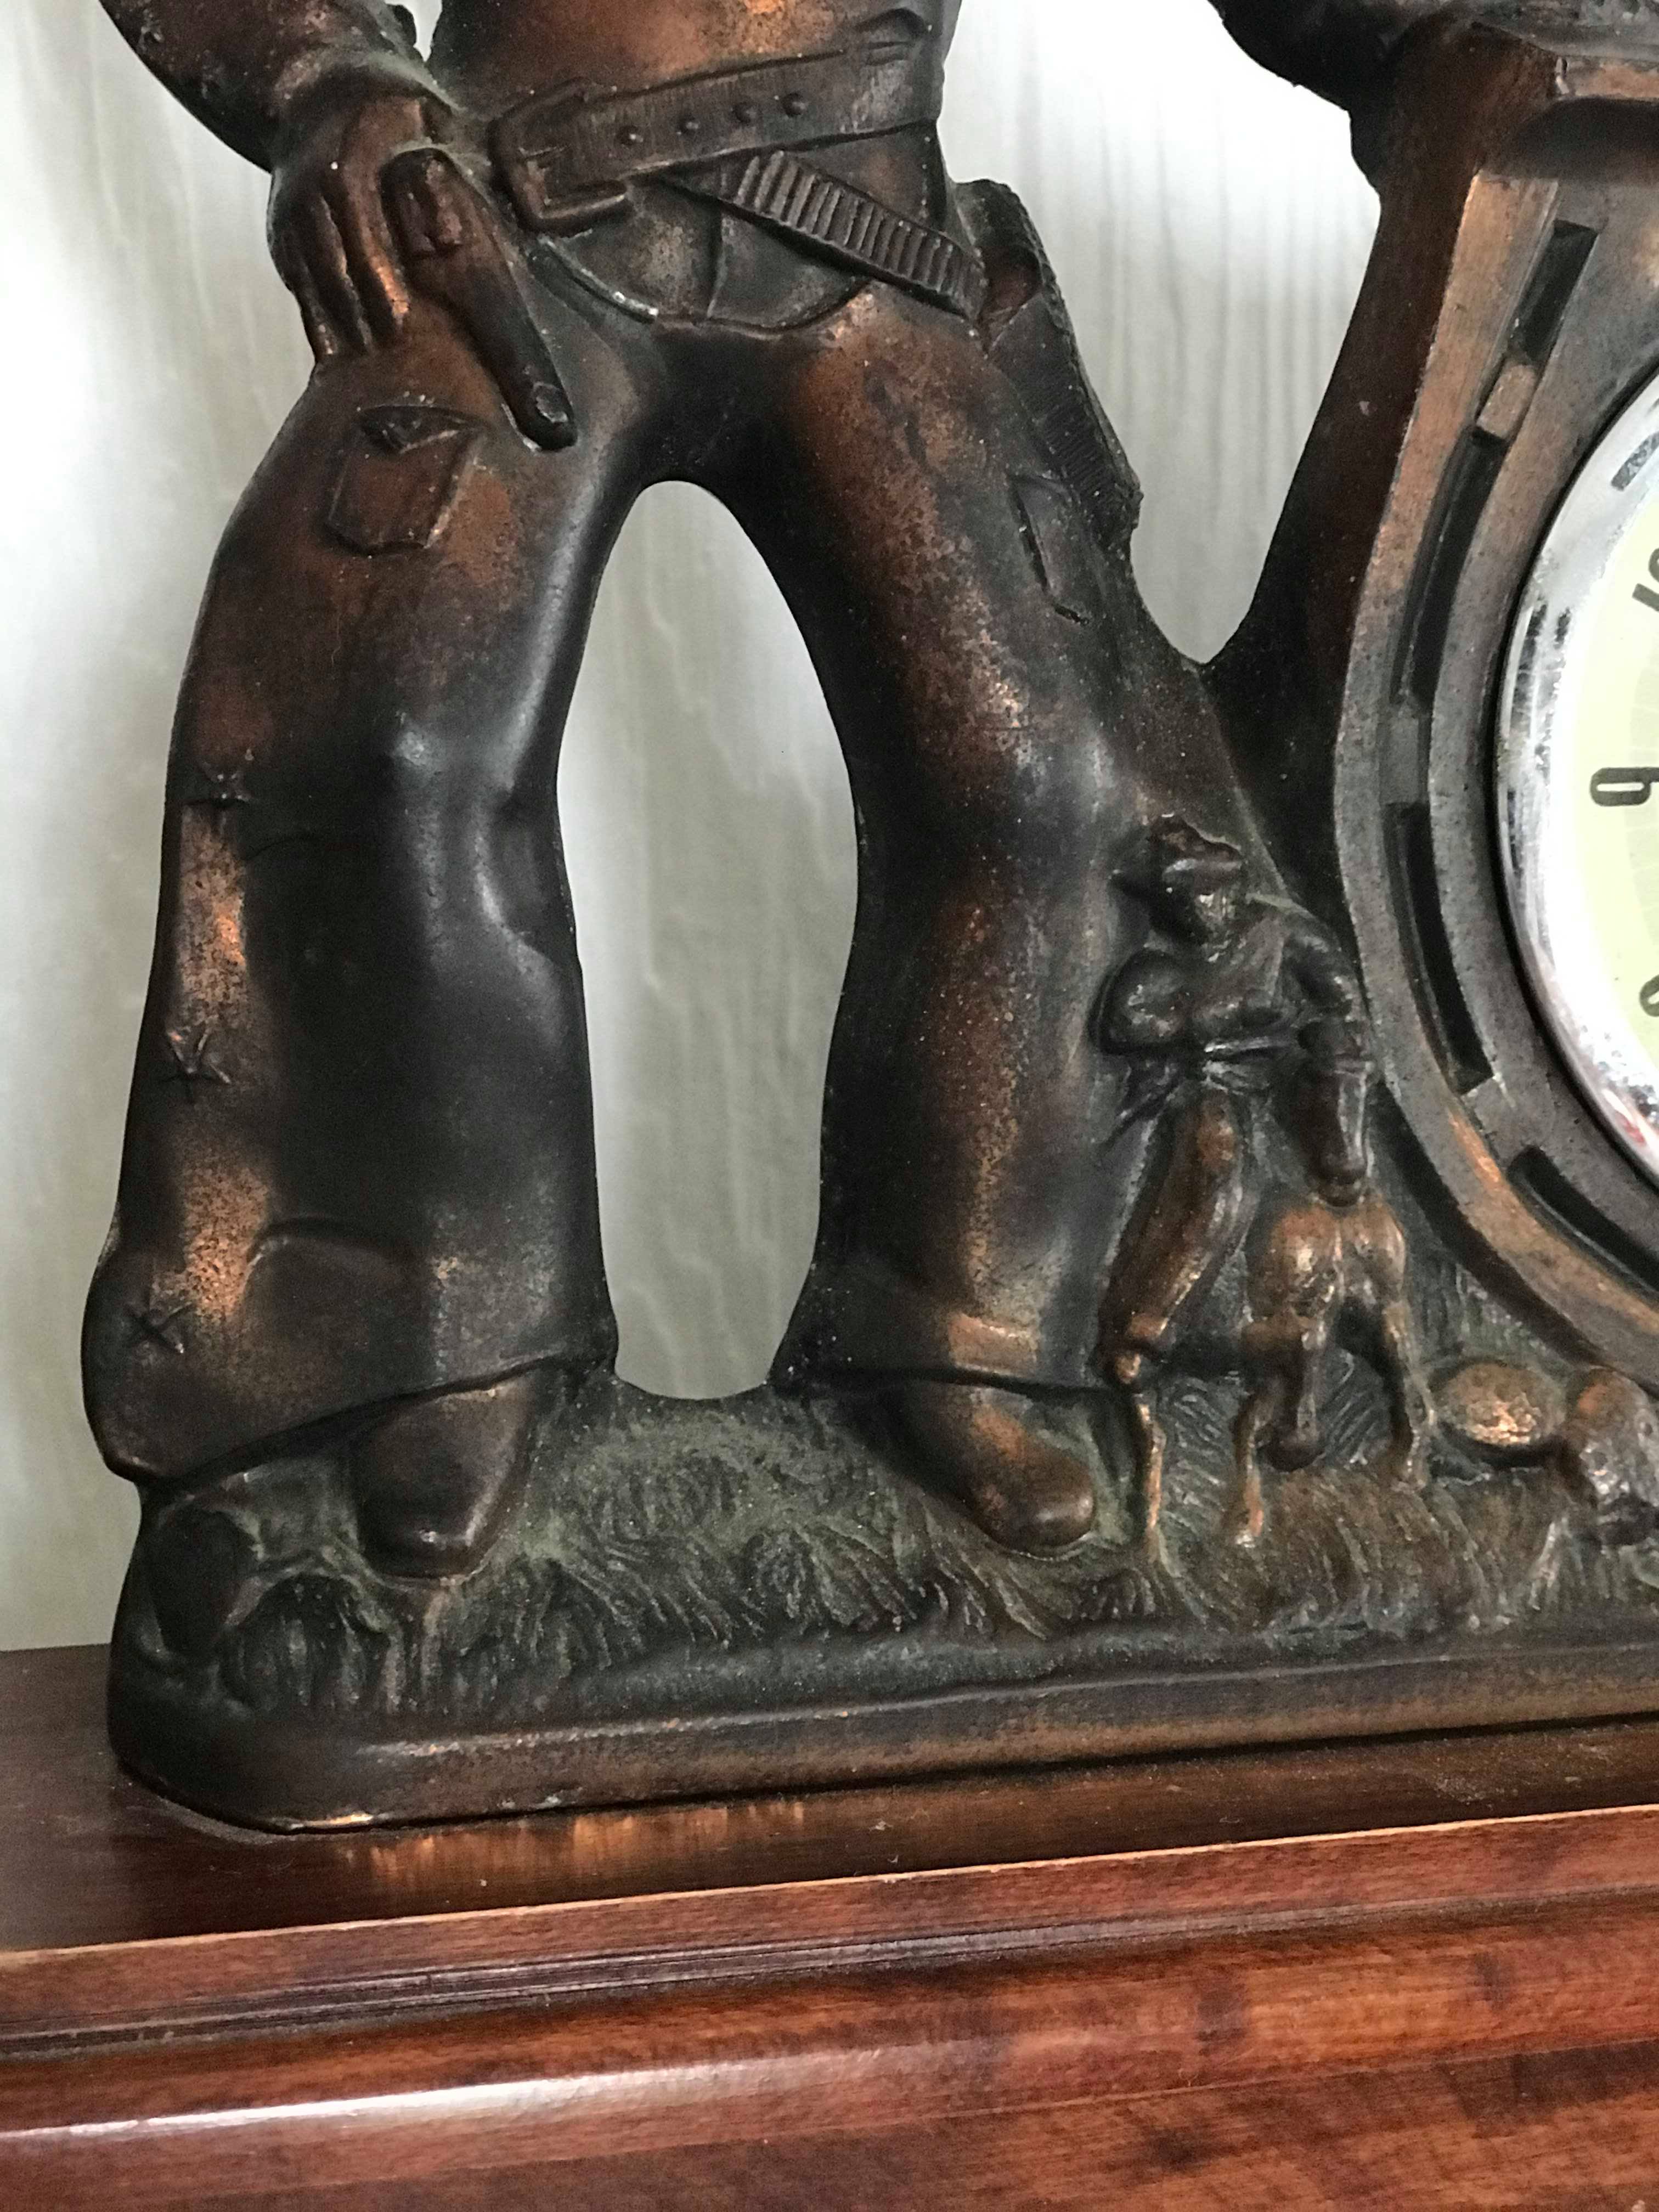 Vintage Cowboy Mantle Clock